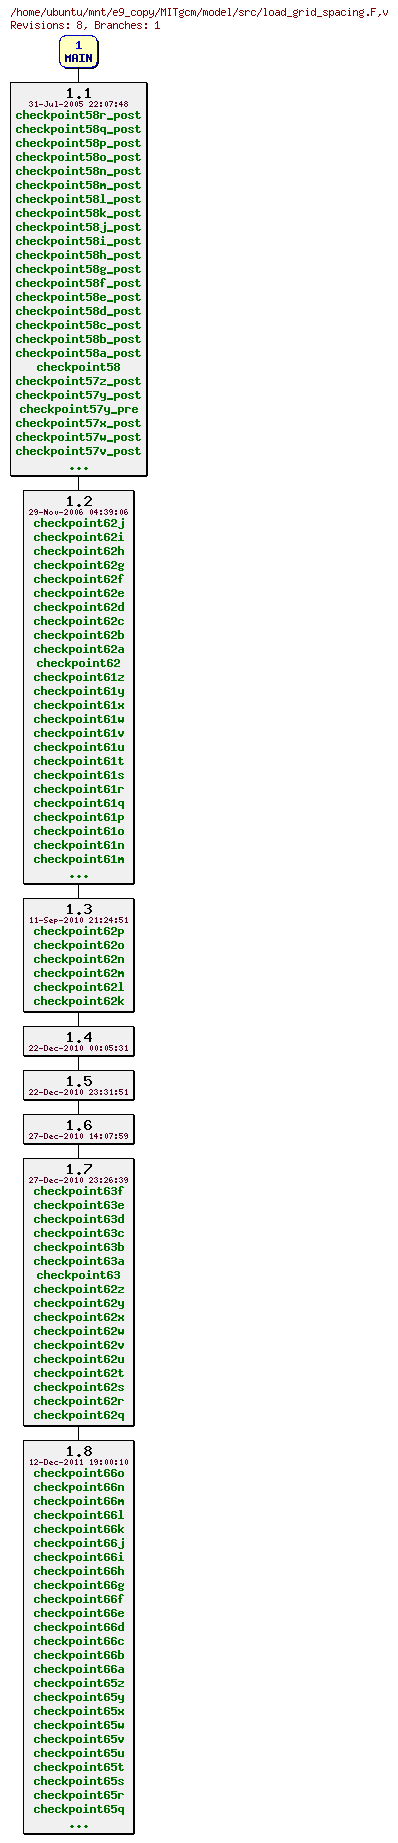 Revisions of MITgcm/model/src/load_grid_spacing.F